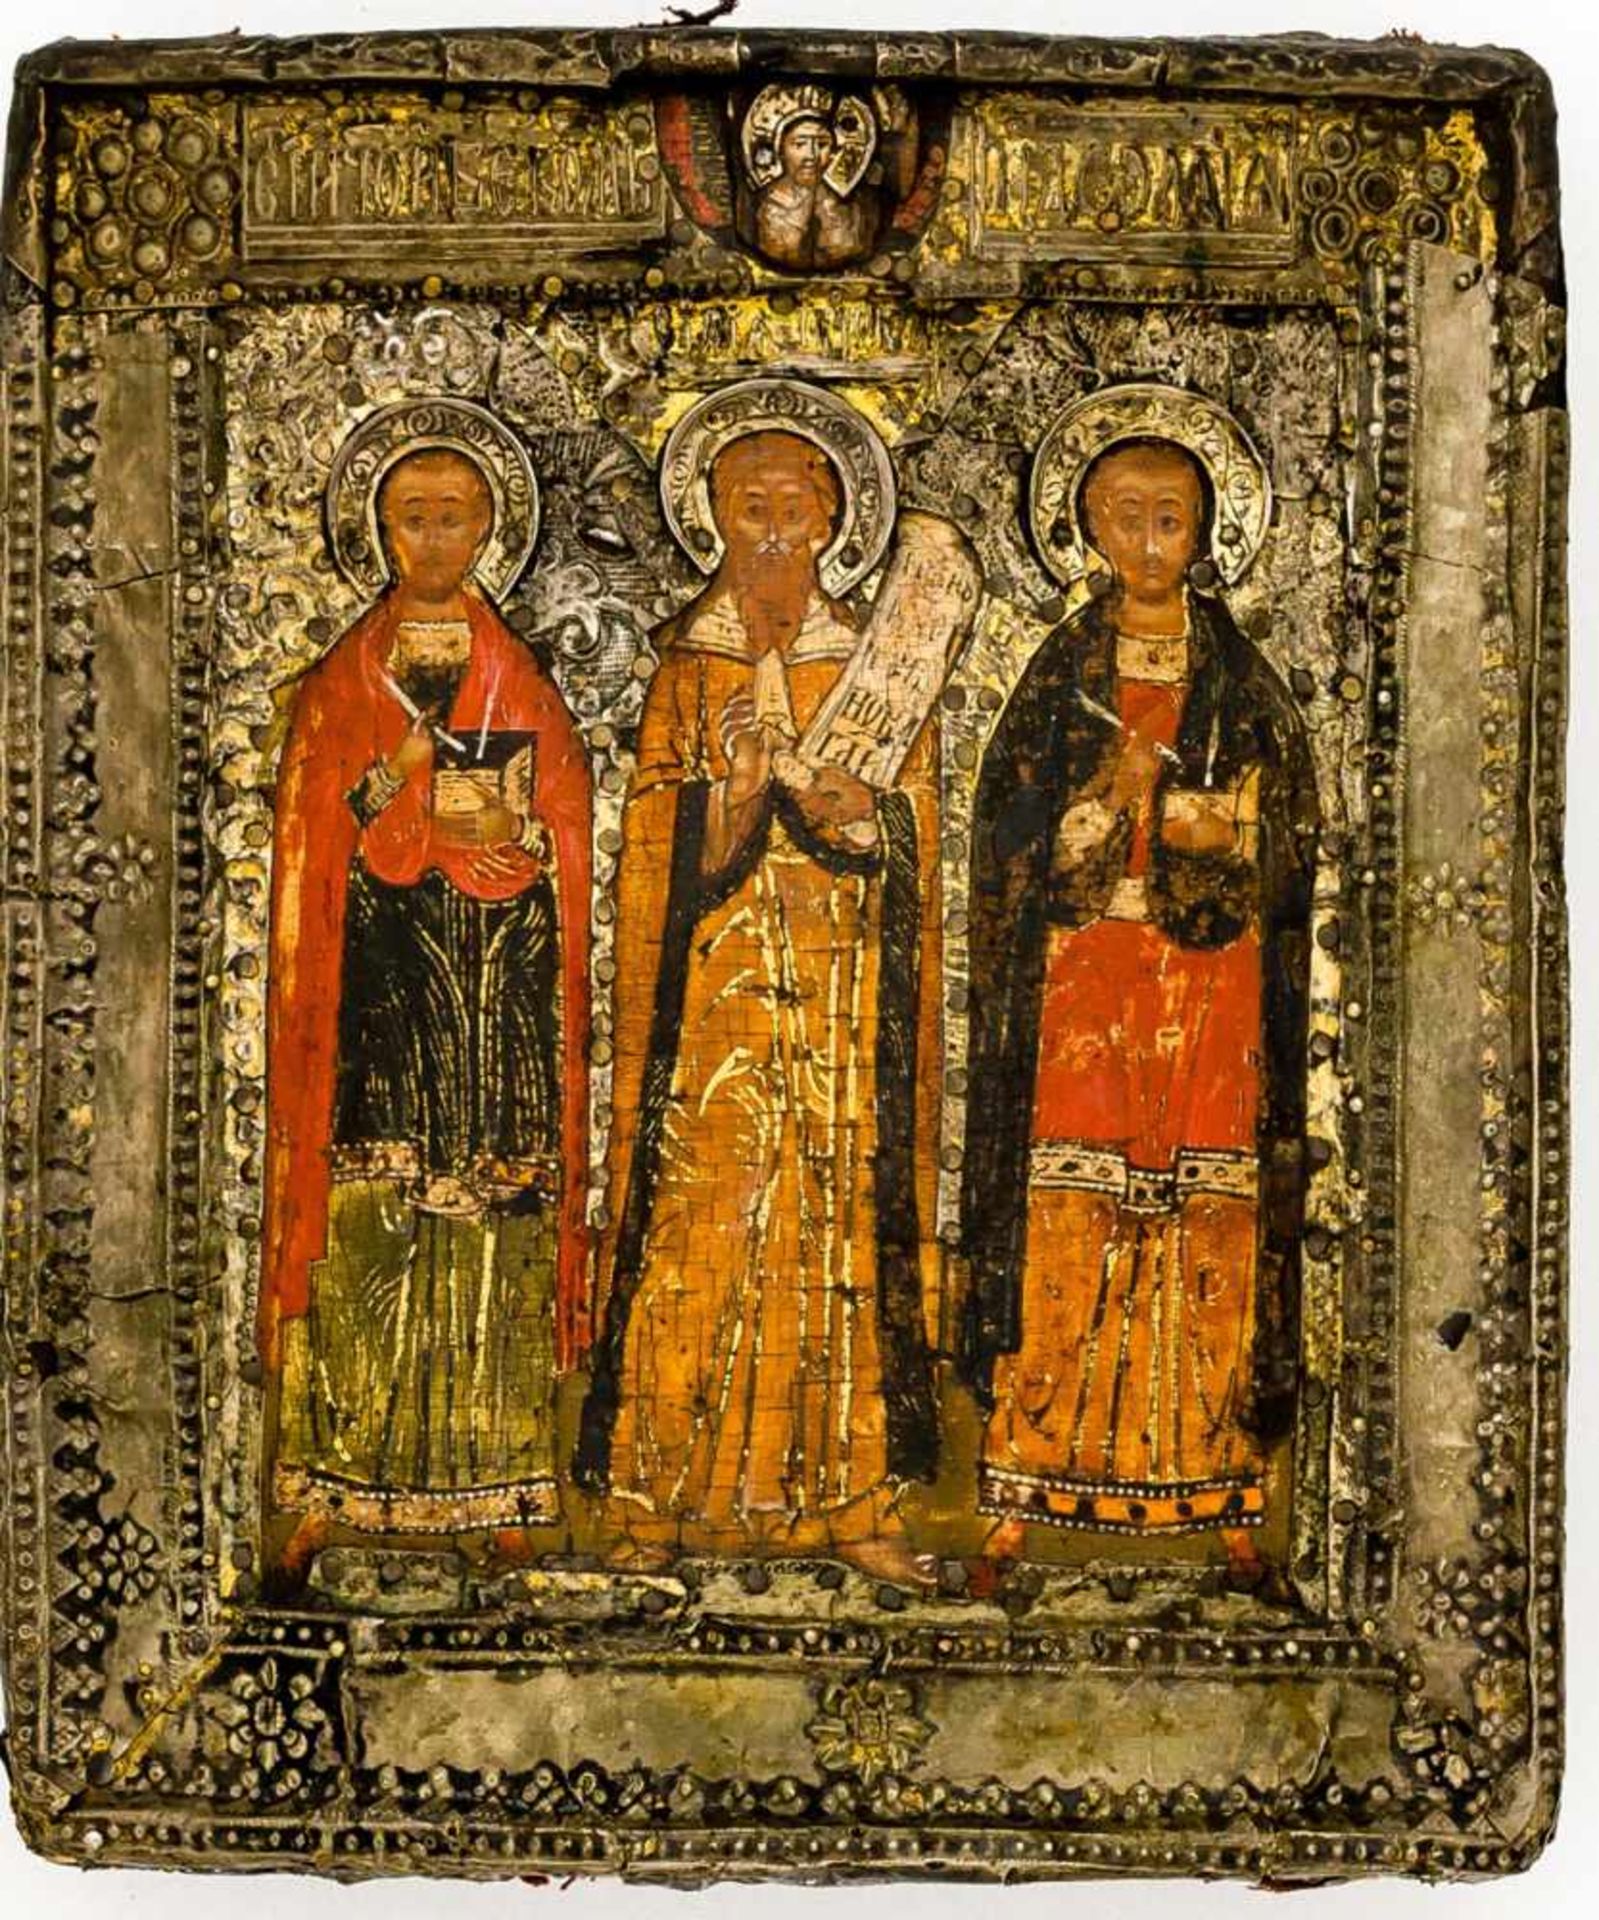 Hl. Prophet Elias, hl. Cosmas und hl.Damian Russische Ikone, um 1600 22 x 19 cm Expertise. Galerie